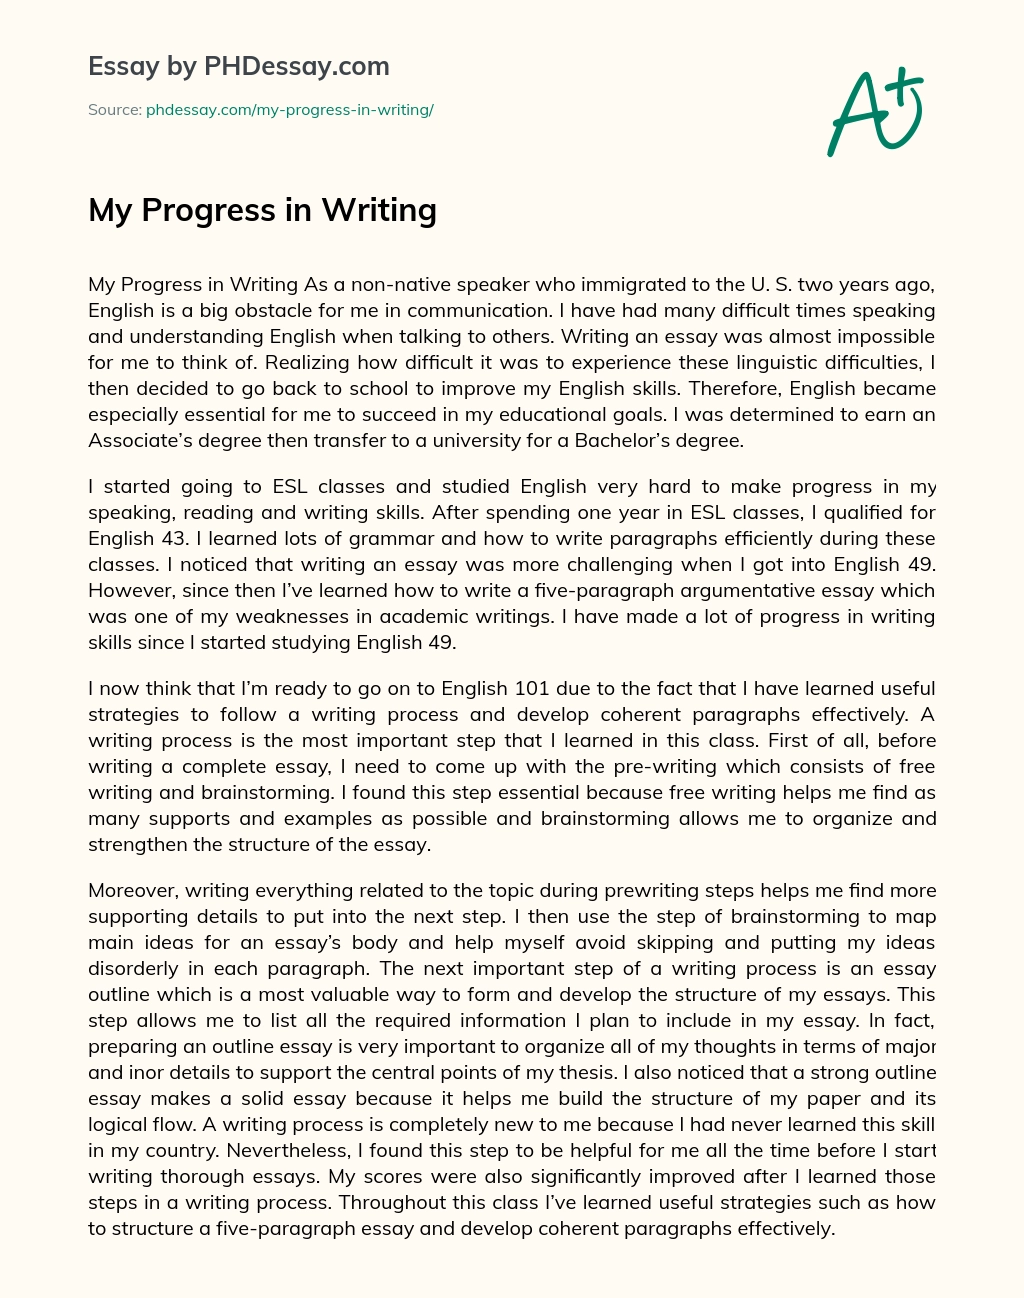 My Progress in Writing essay